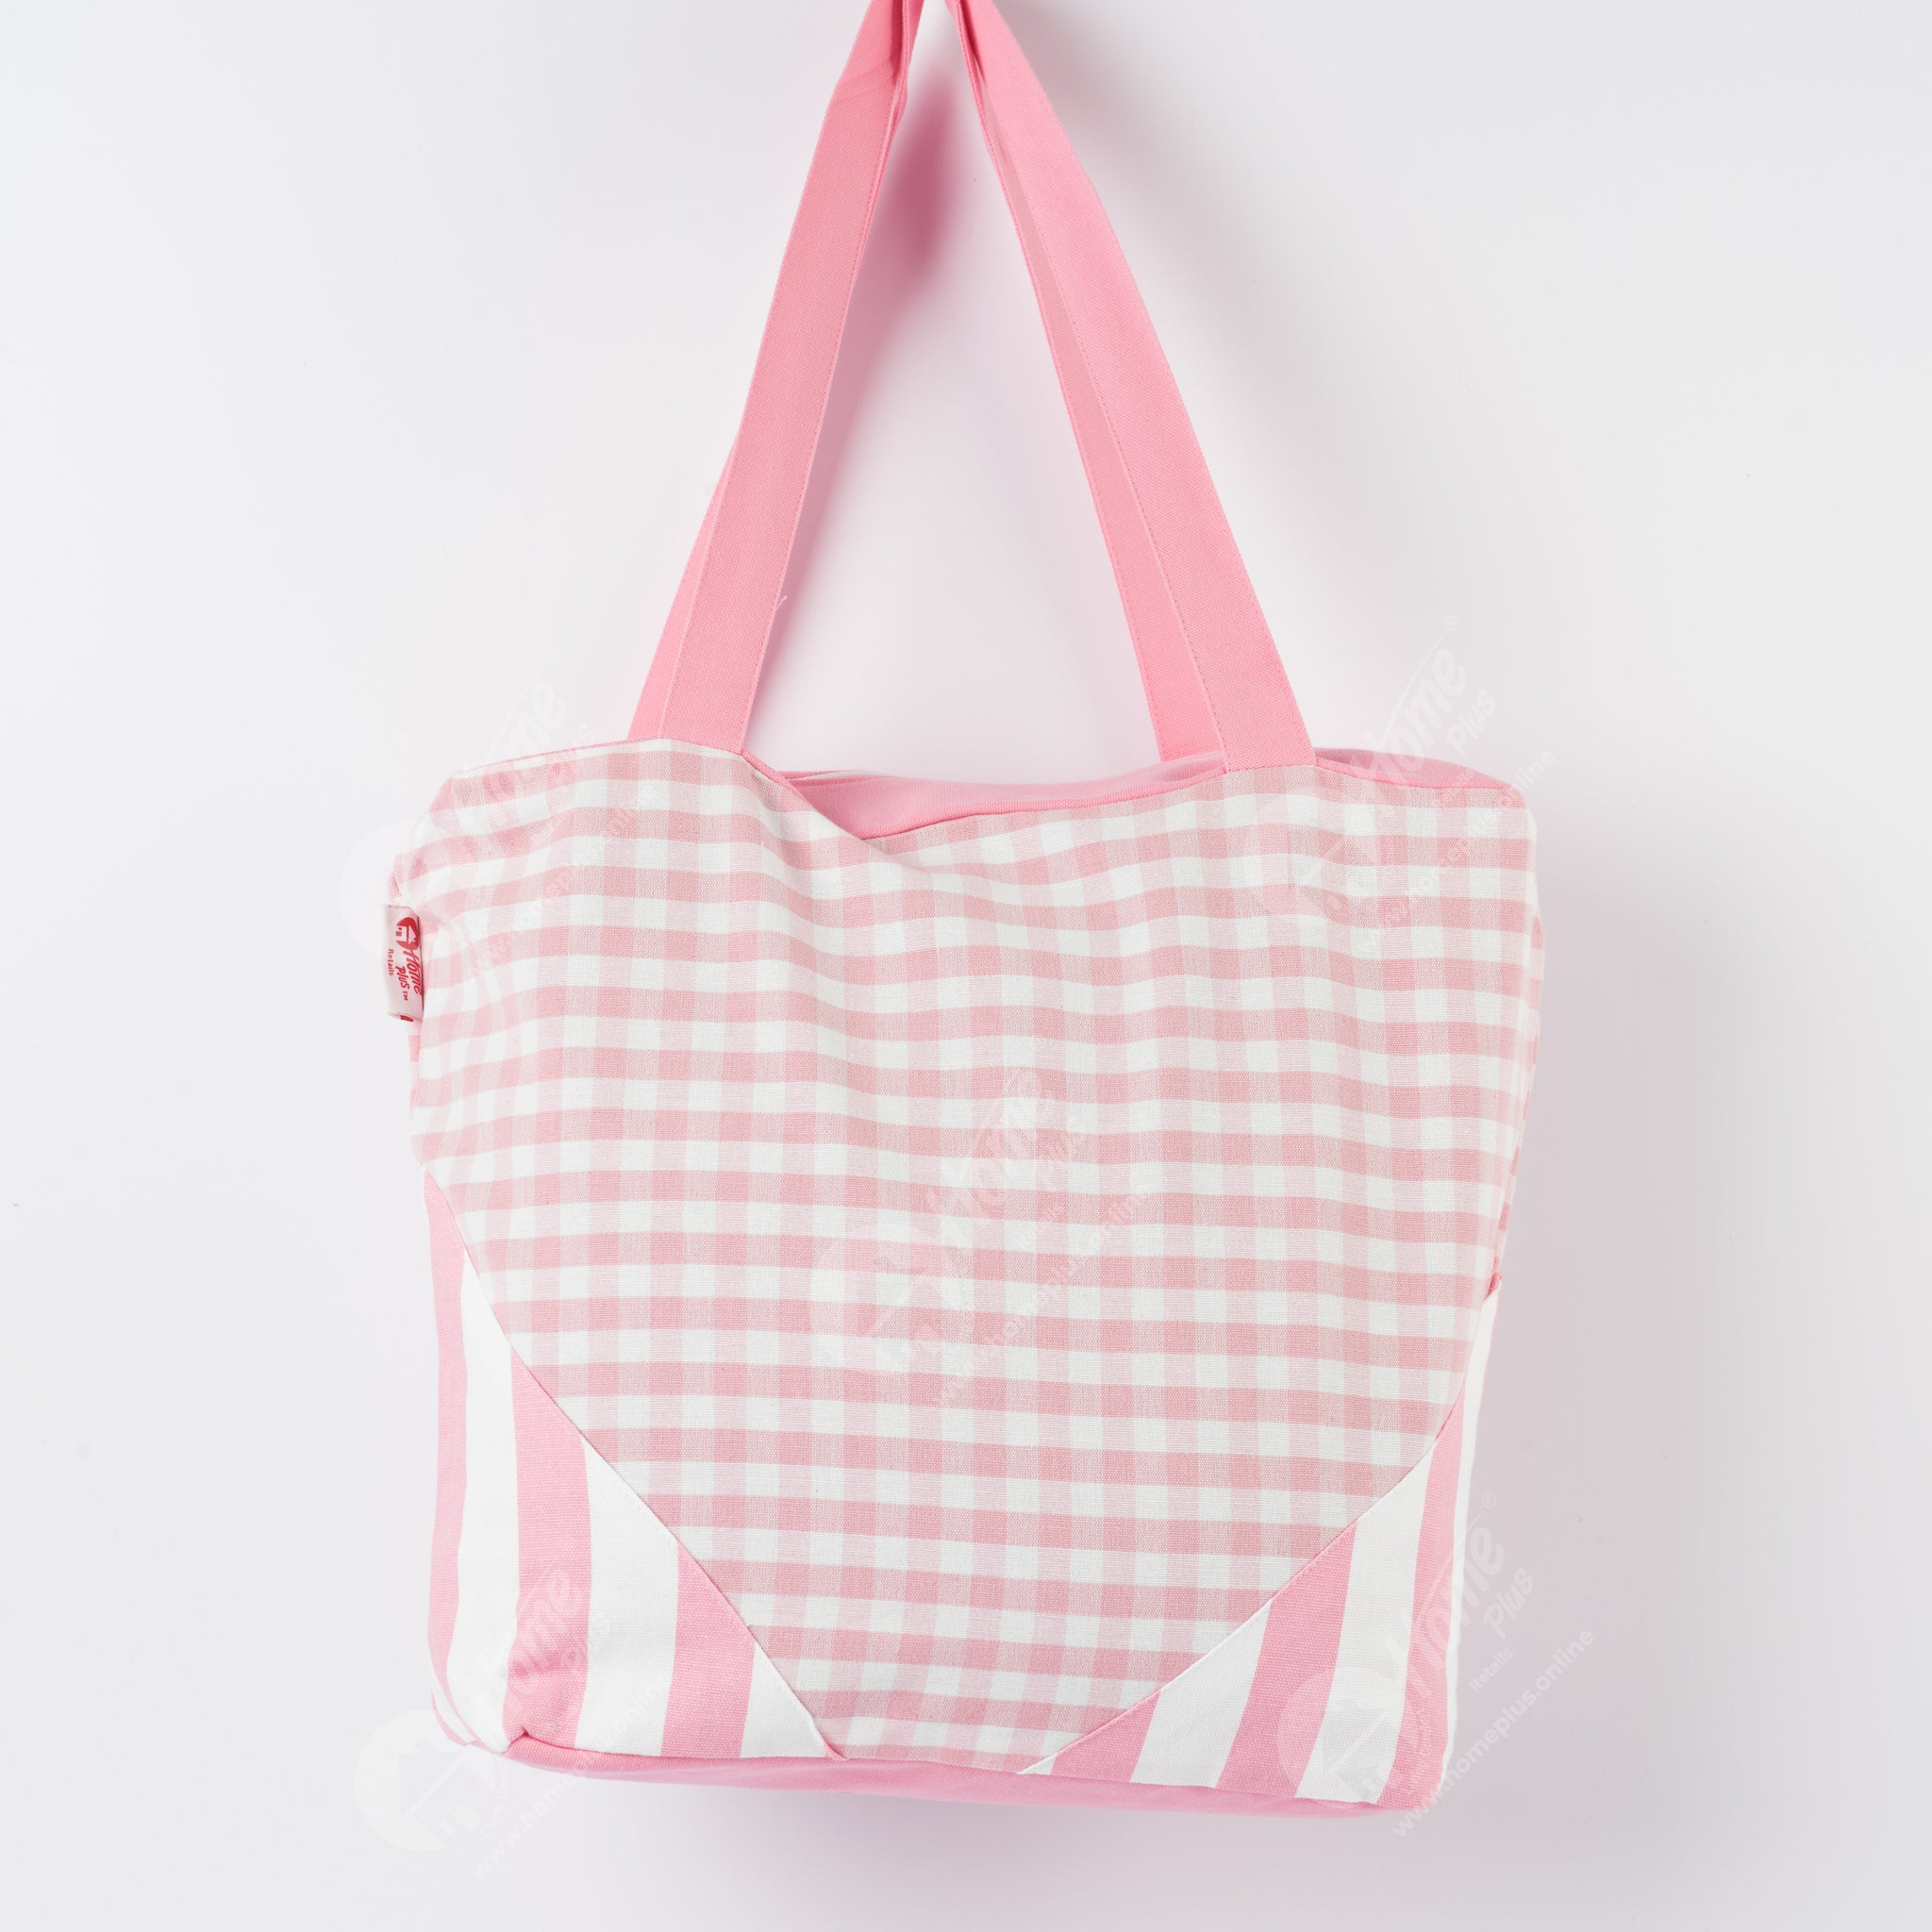 Shopping Bag - Gingham Check Pink